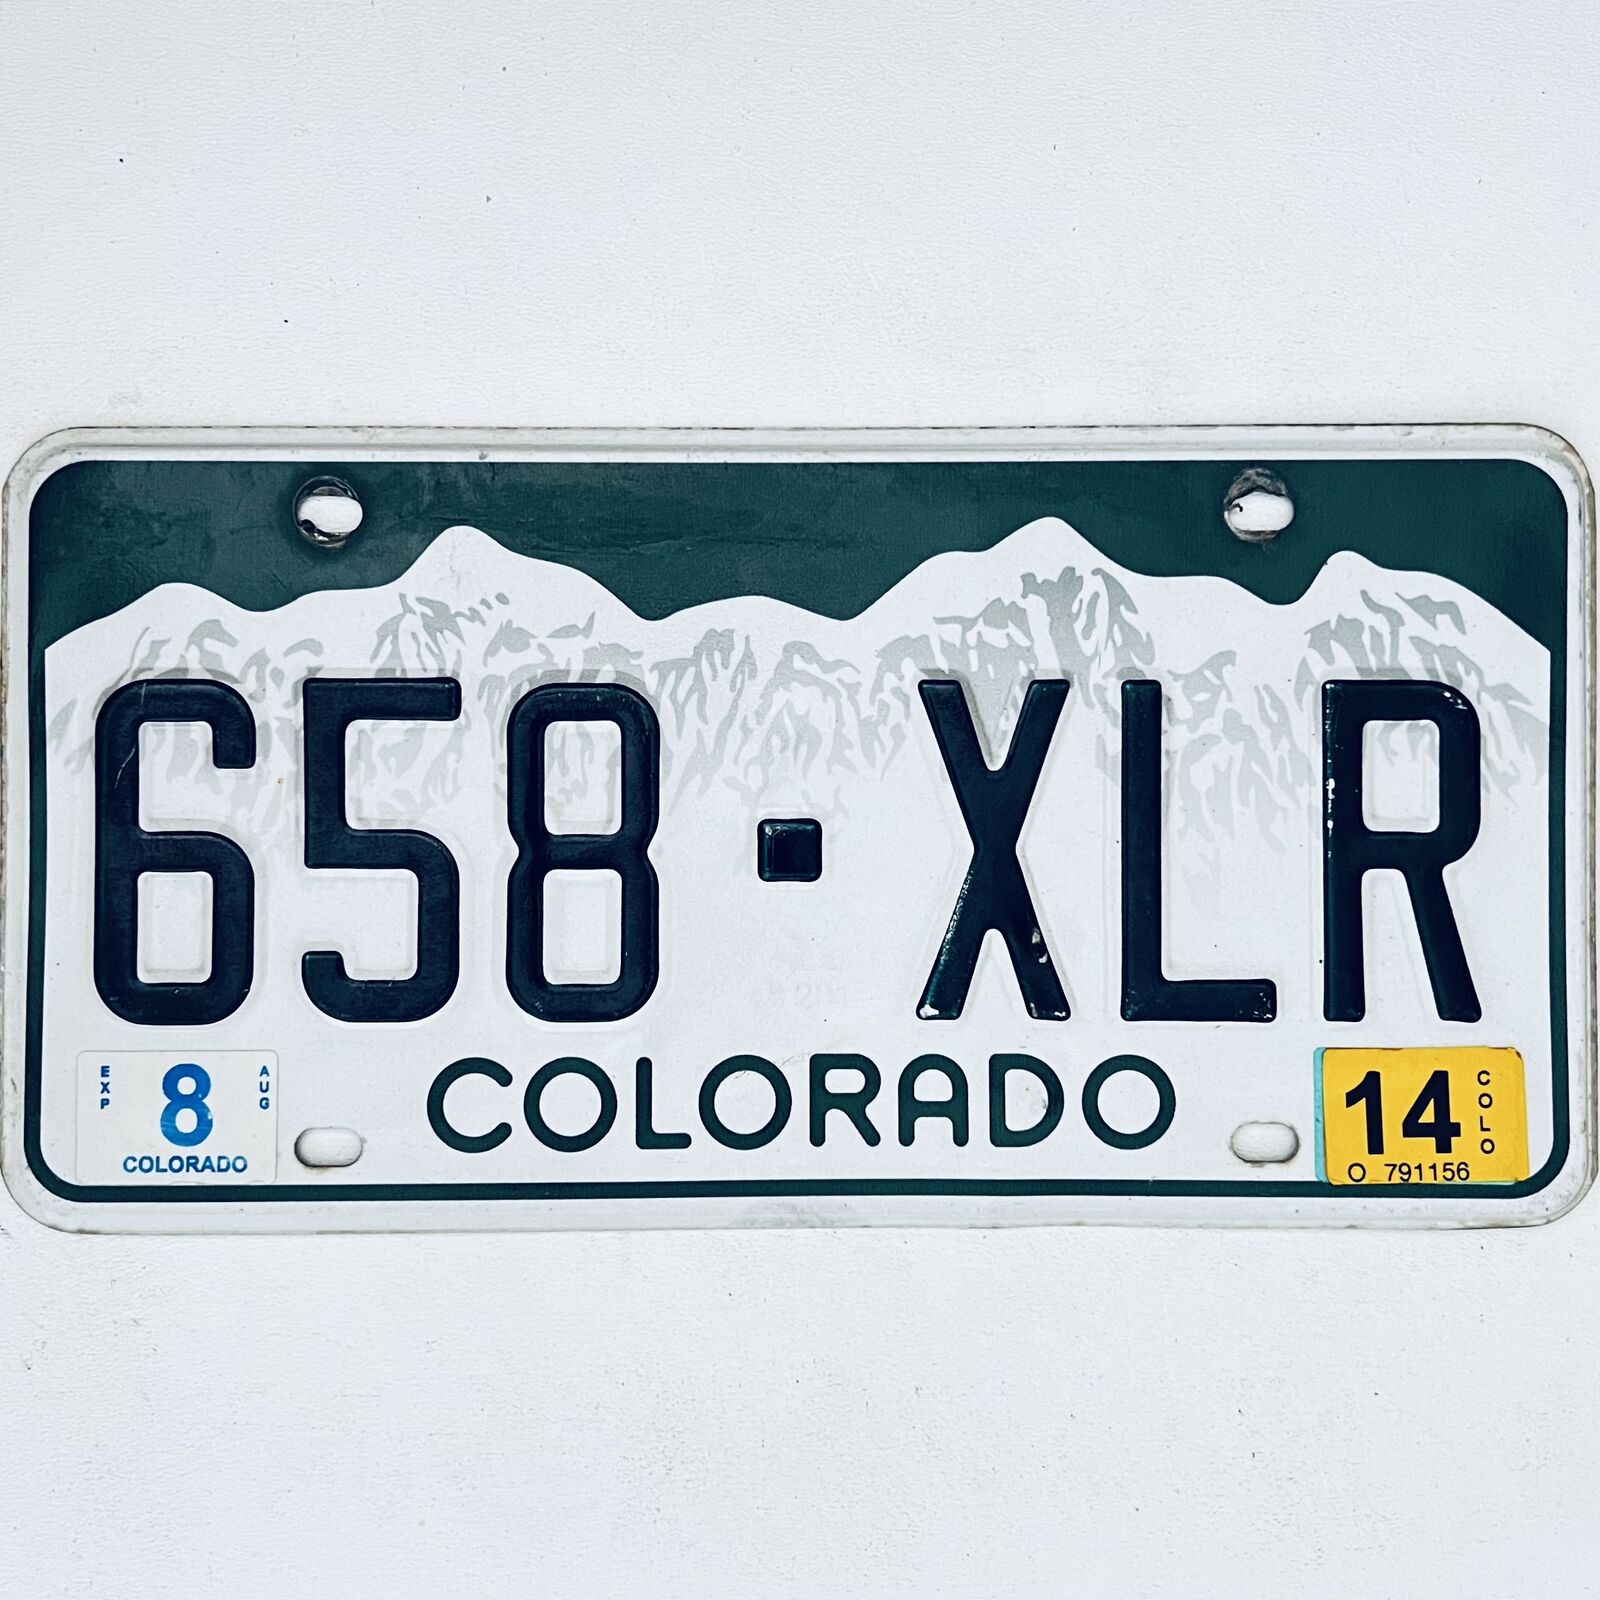 2014 United States Colorado Rockies Passenger License Plate 658-XLR